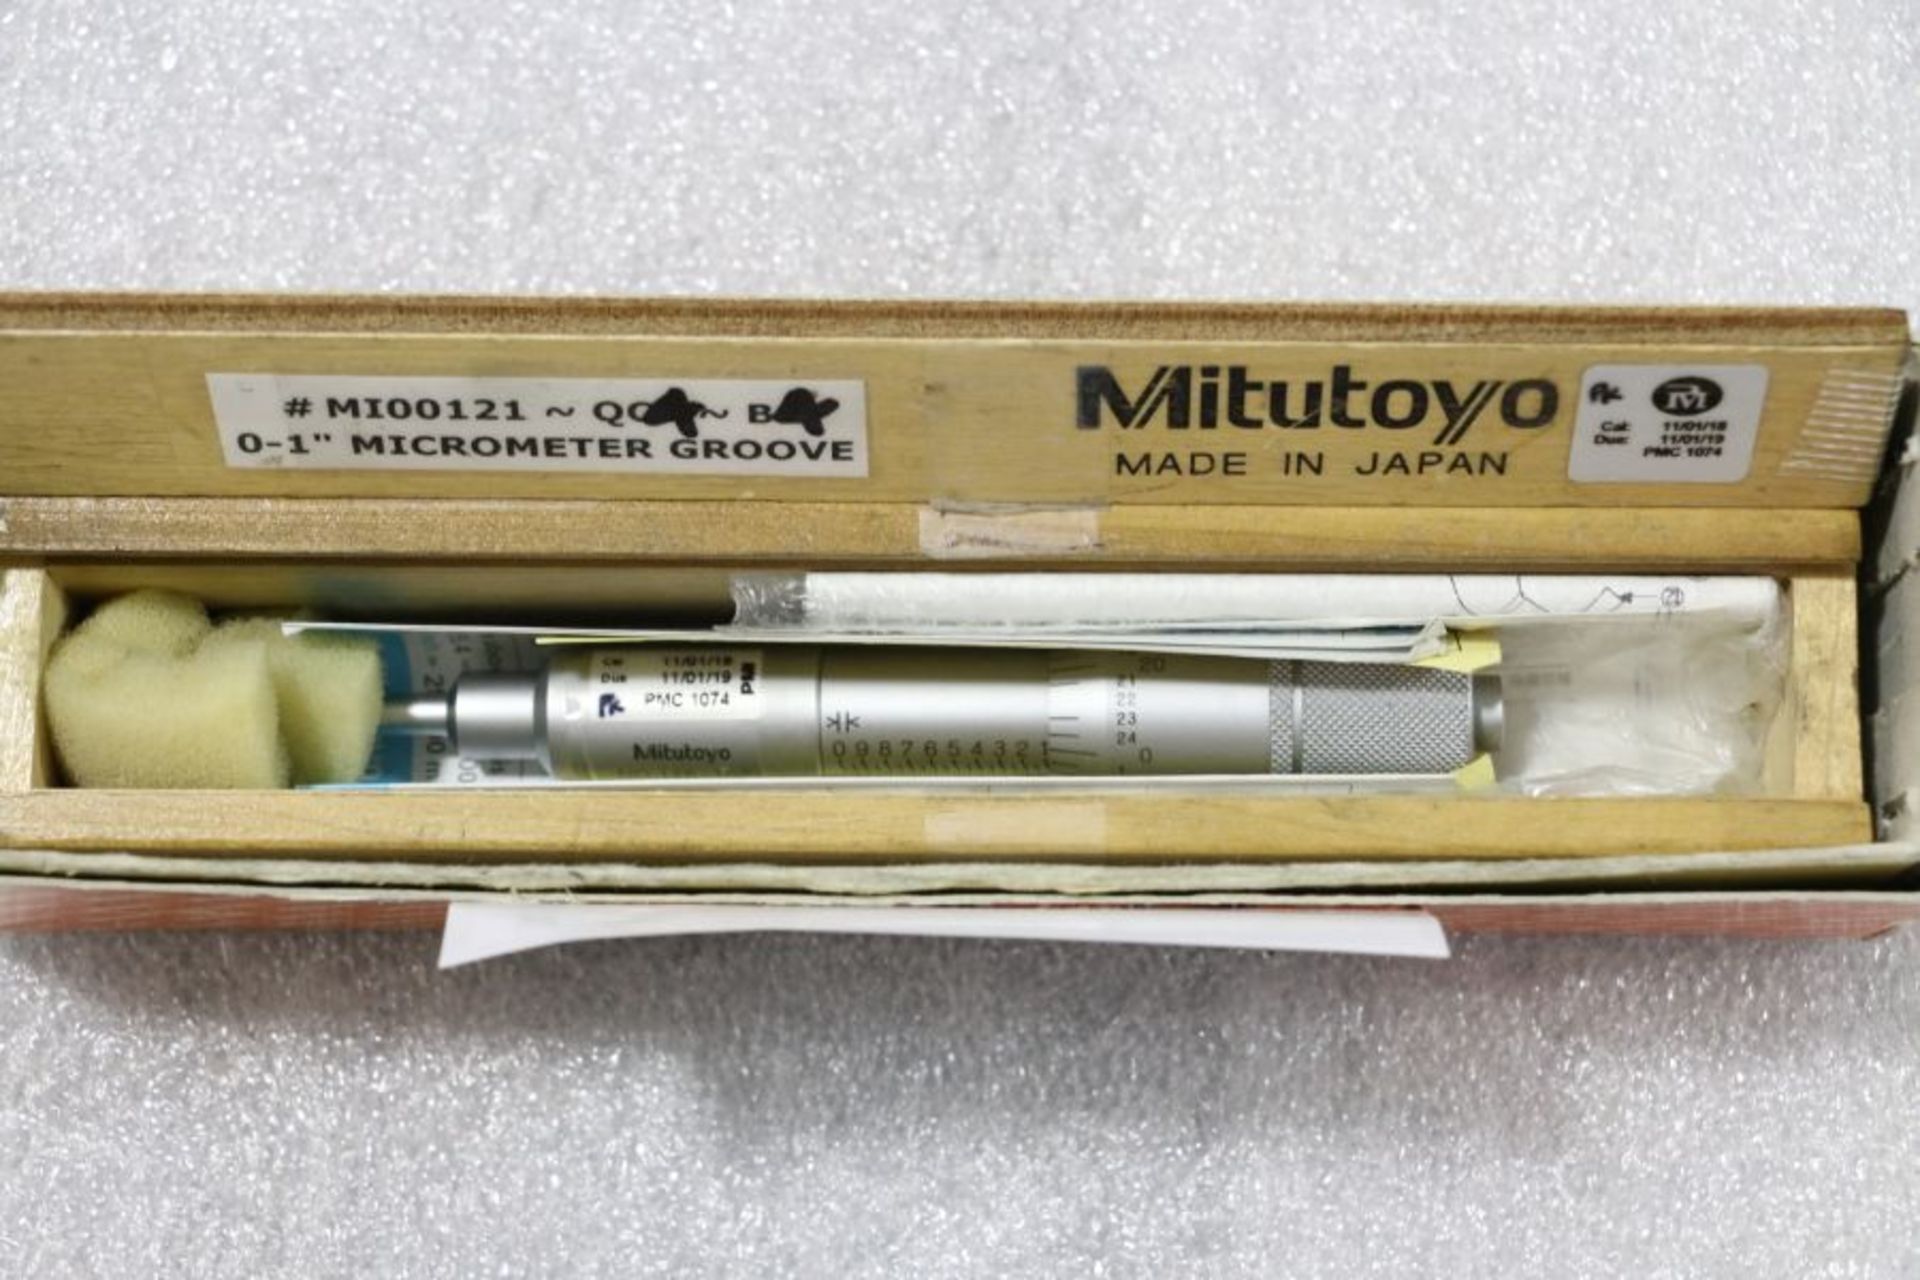 Mitutoyo 0 - 1" Groove Micrometer - Image 2 of 4